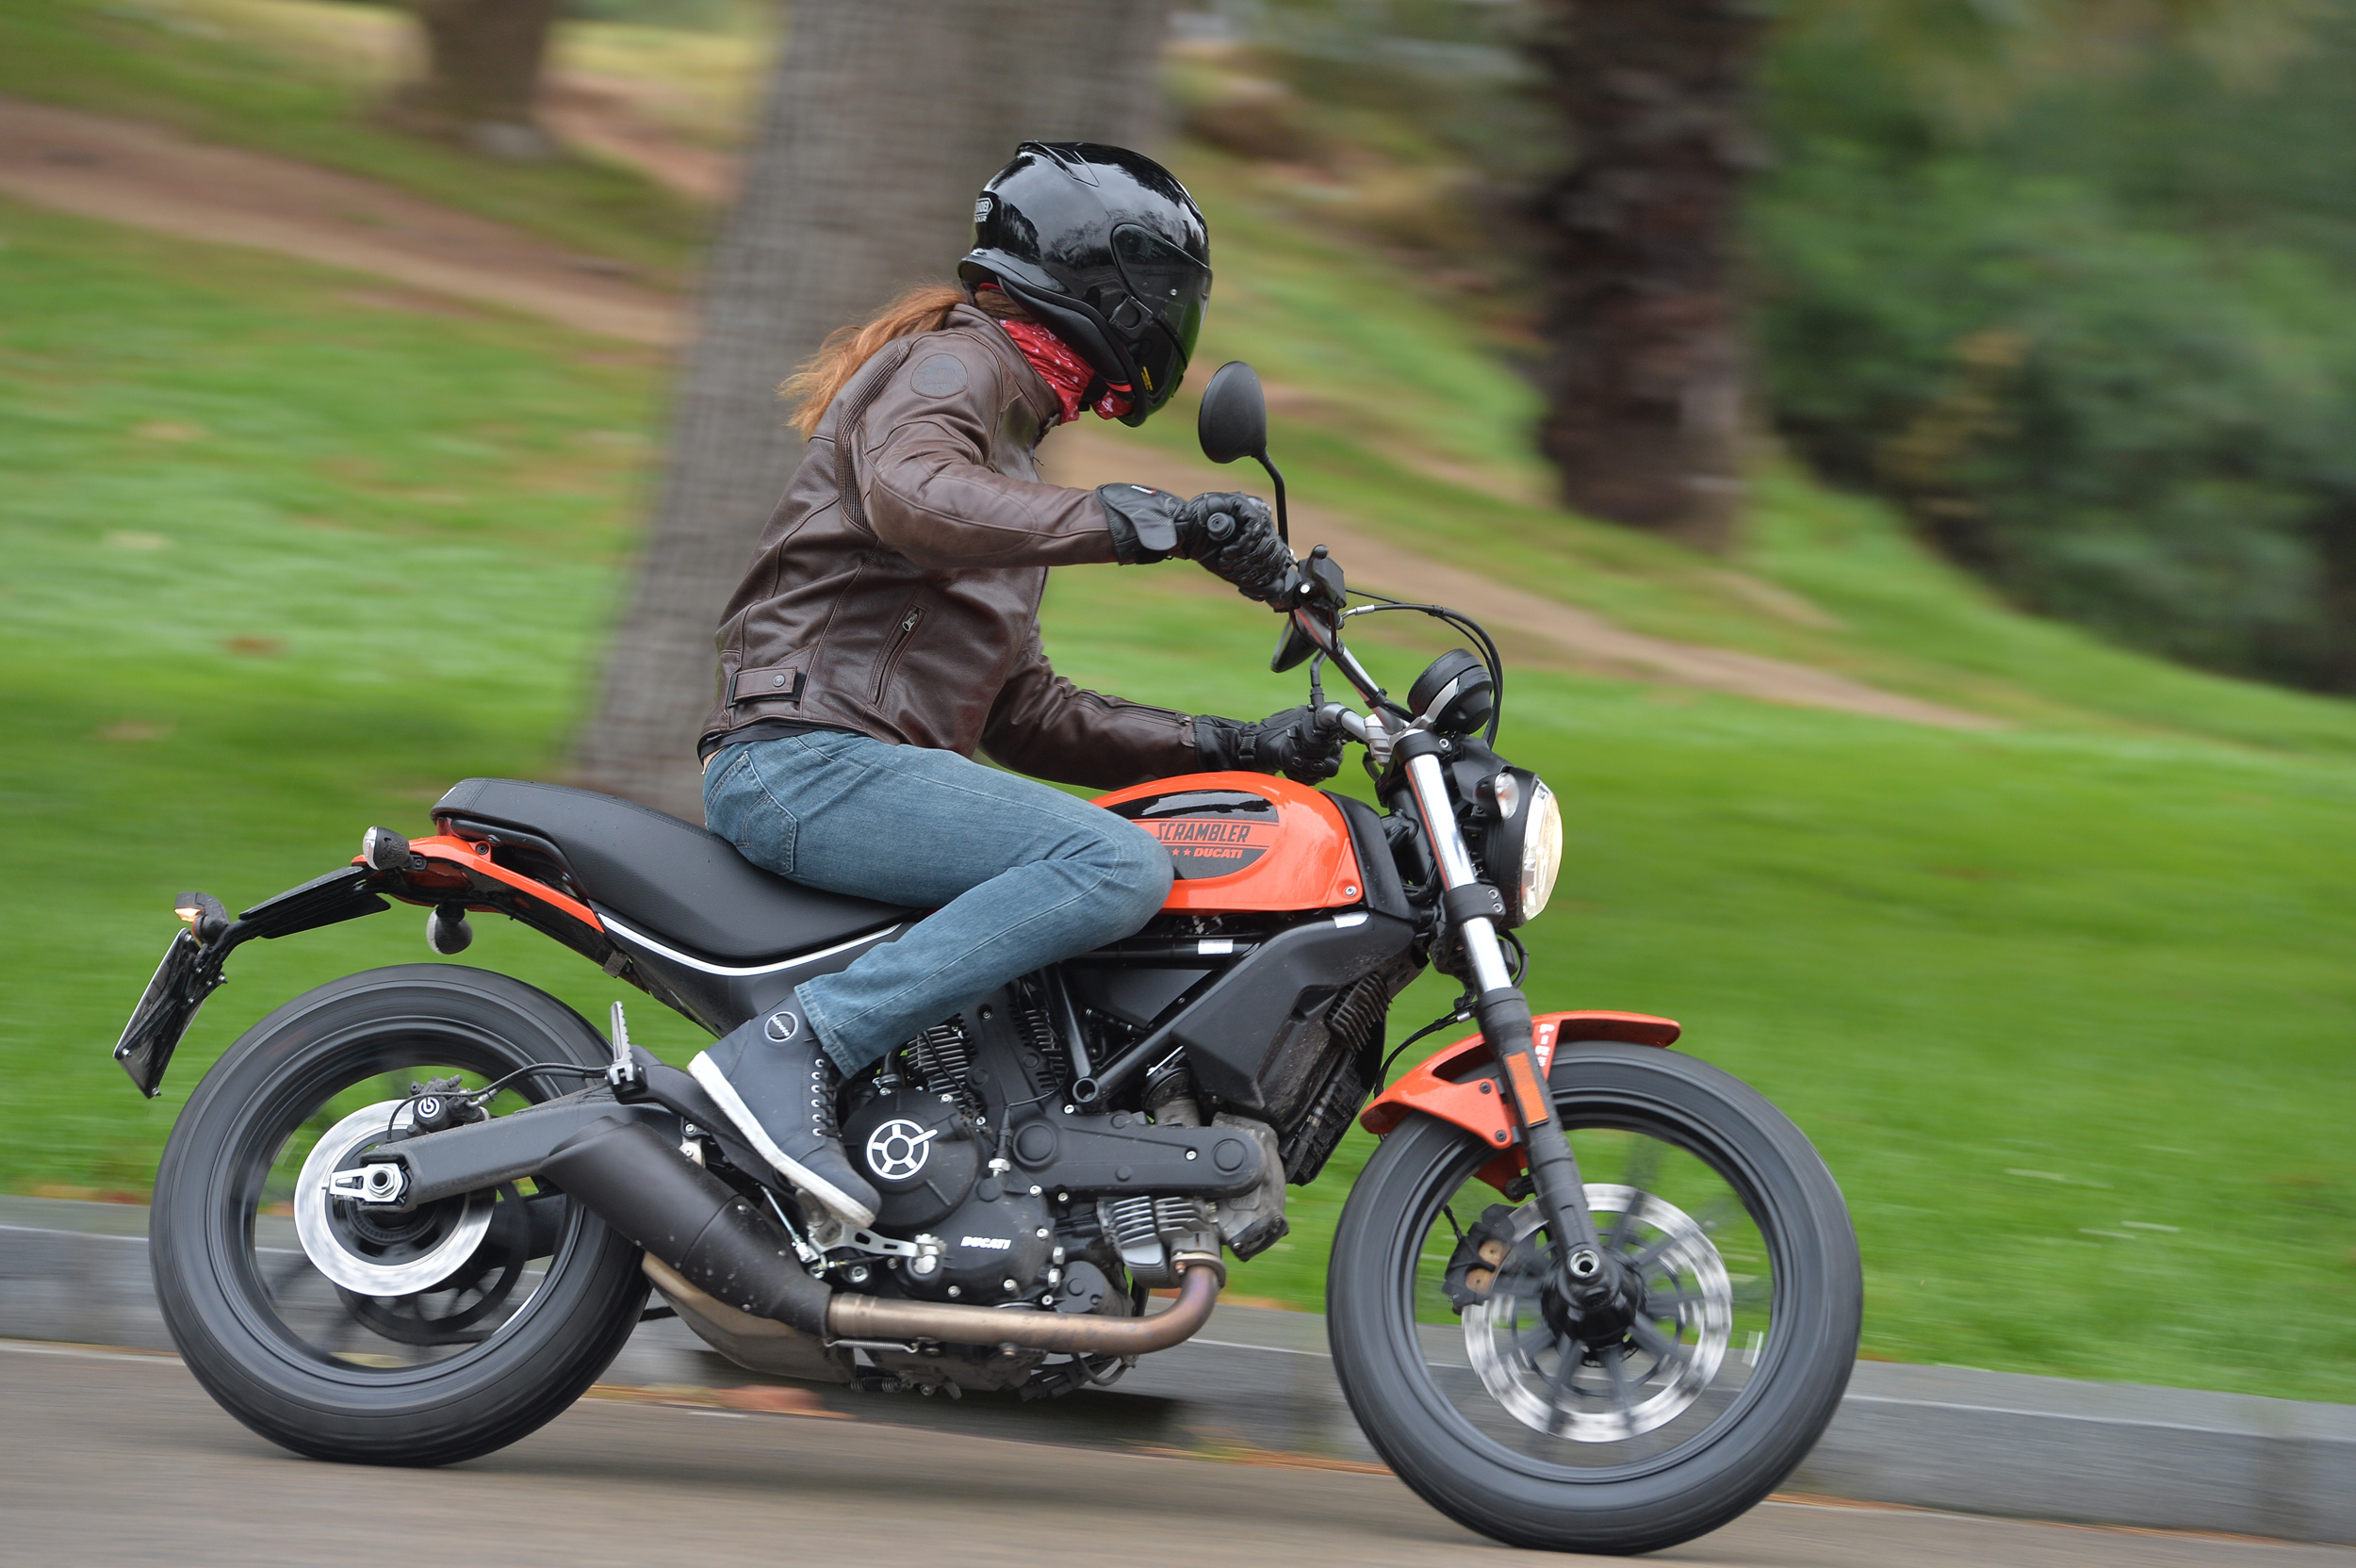 First ride: Ducati Scrambler Sixty2 review | Visordown